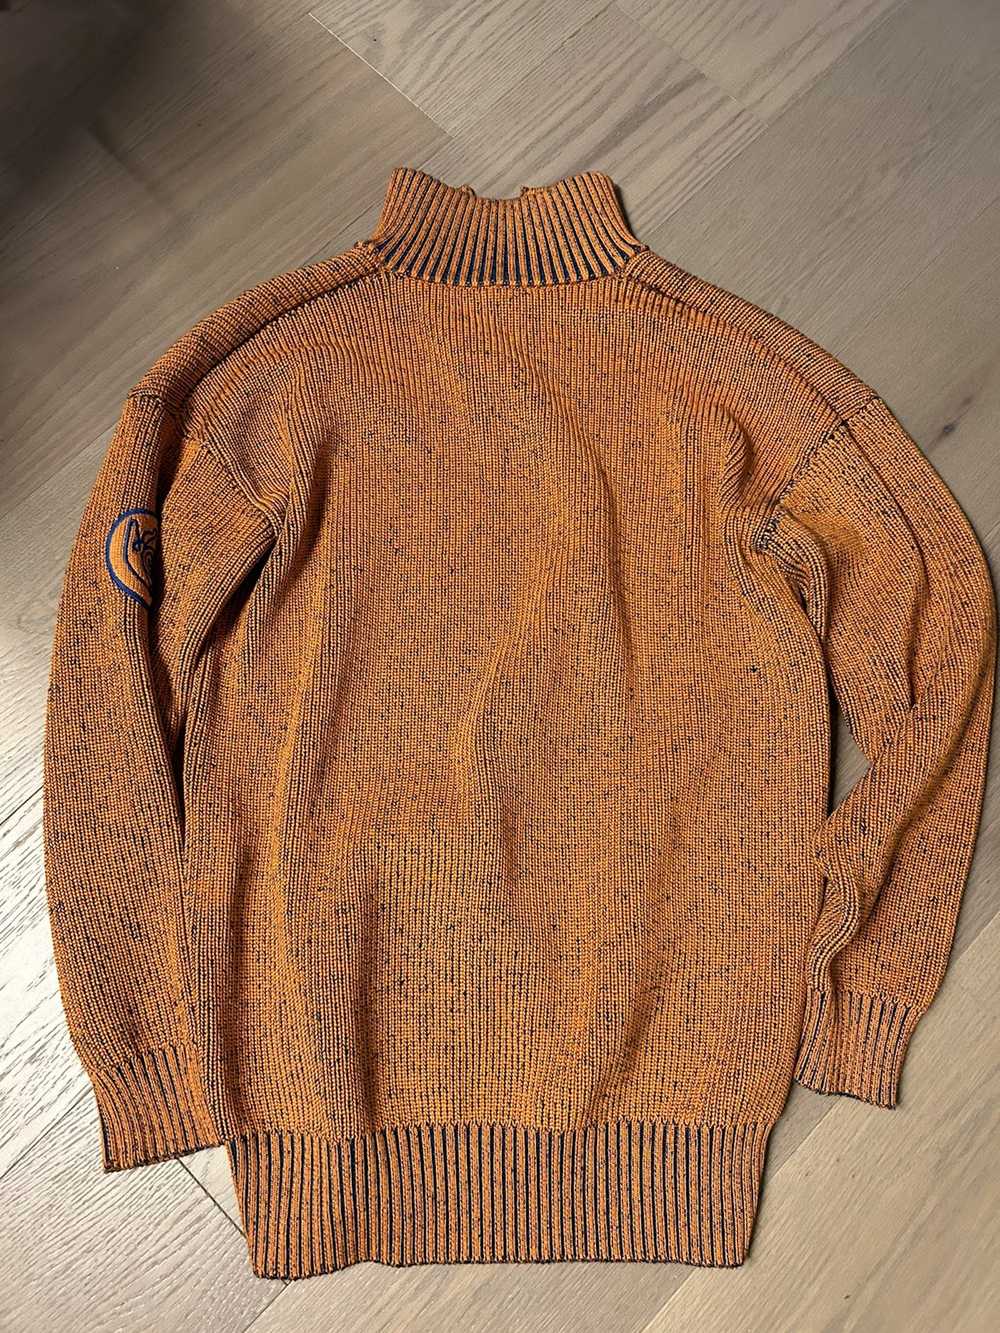 Loewe Loewe melange patch sweater - image 6